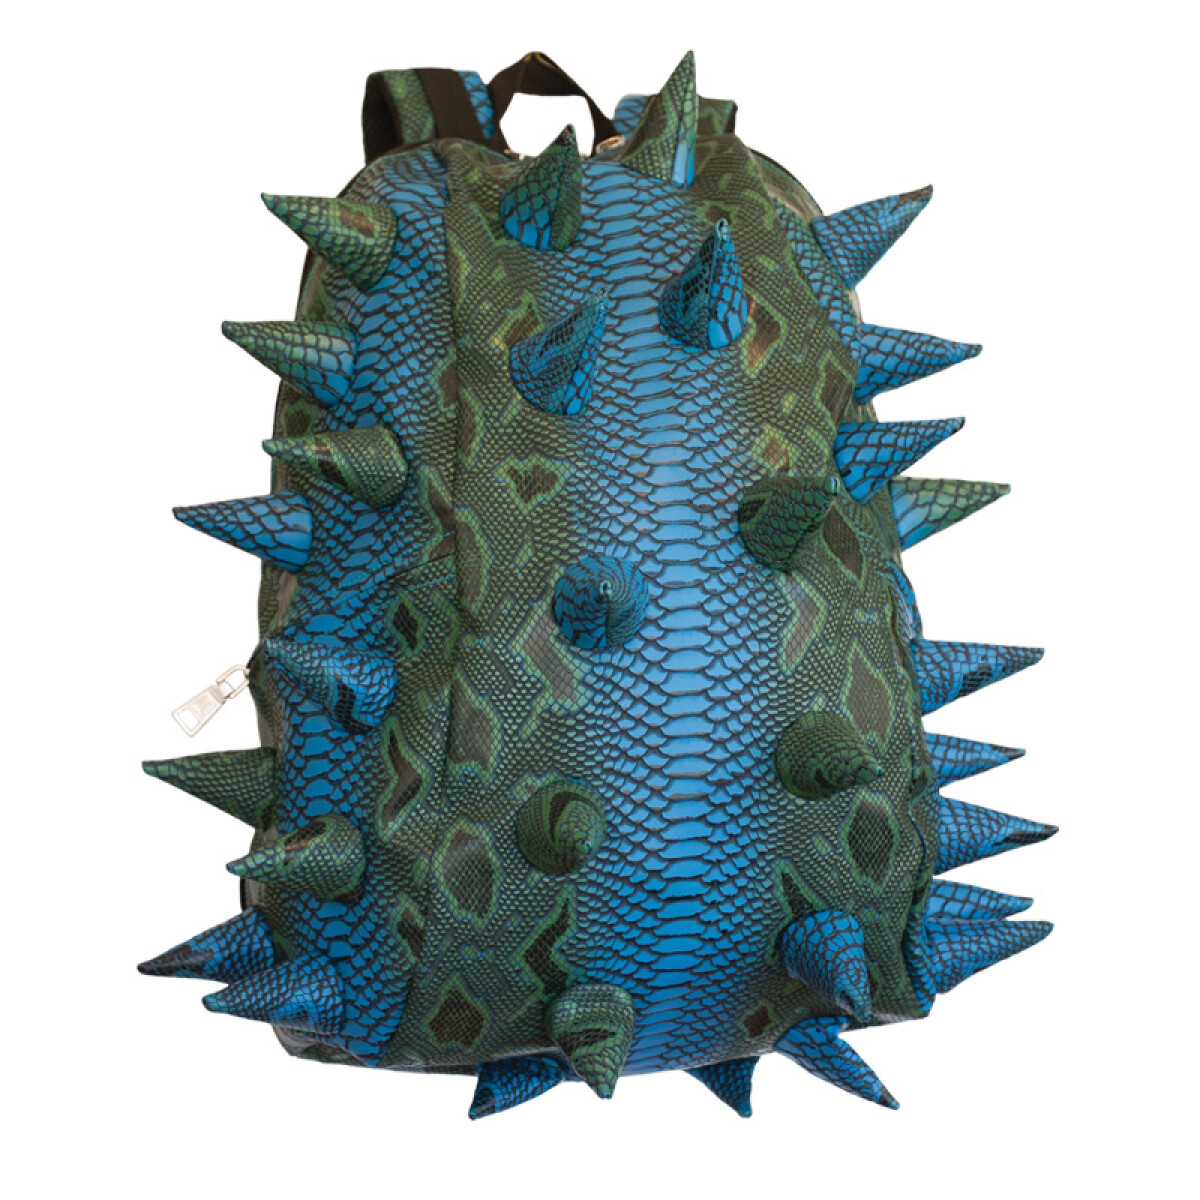 Mochila Madpax Patentada Original Spike - Blue mamba t -rex 